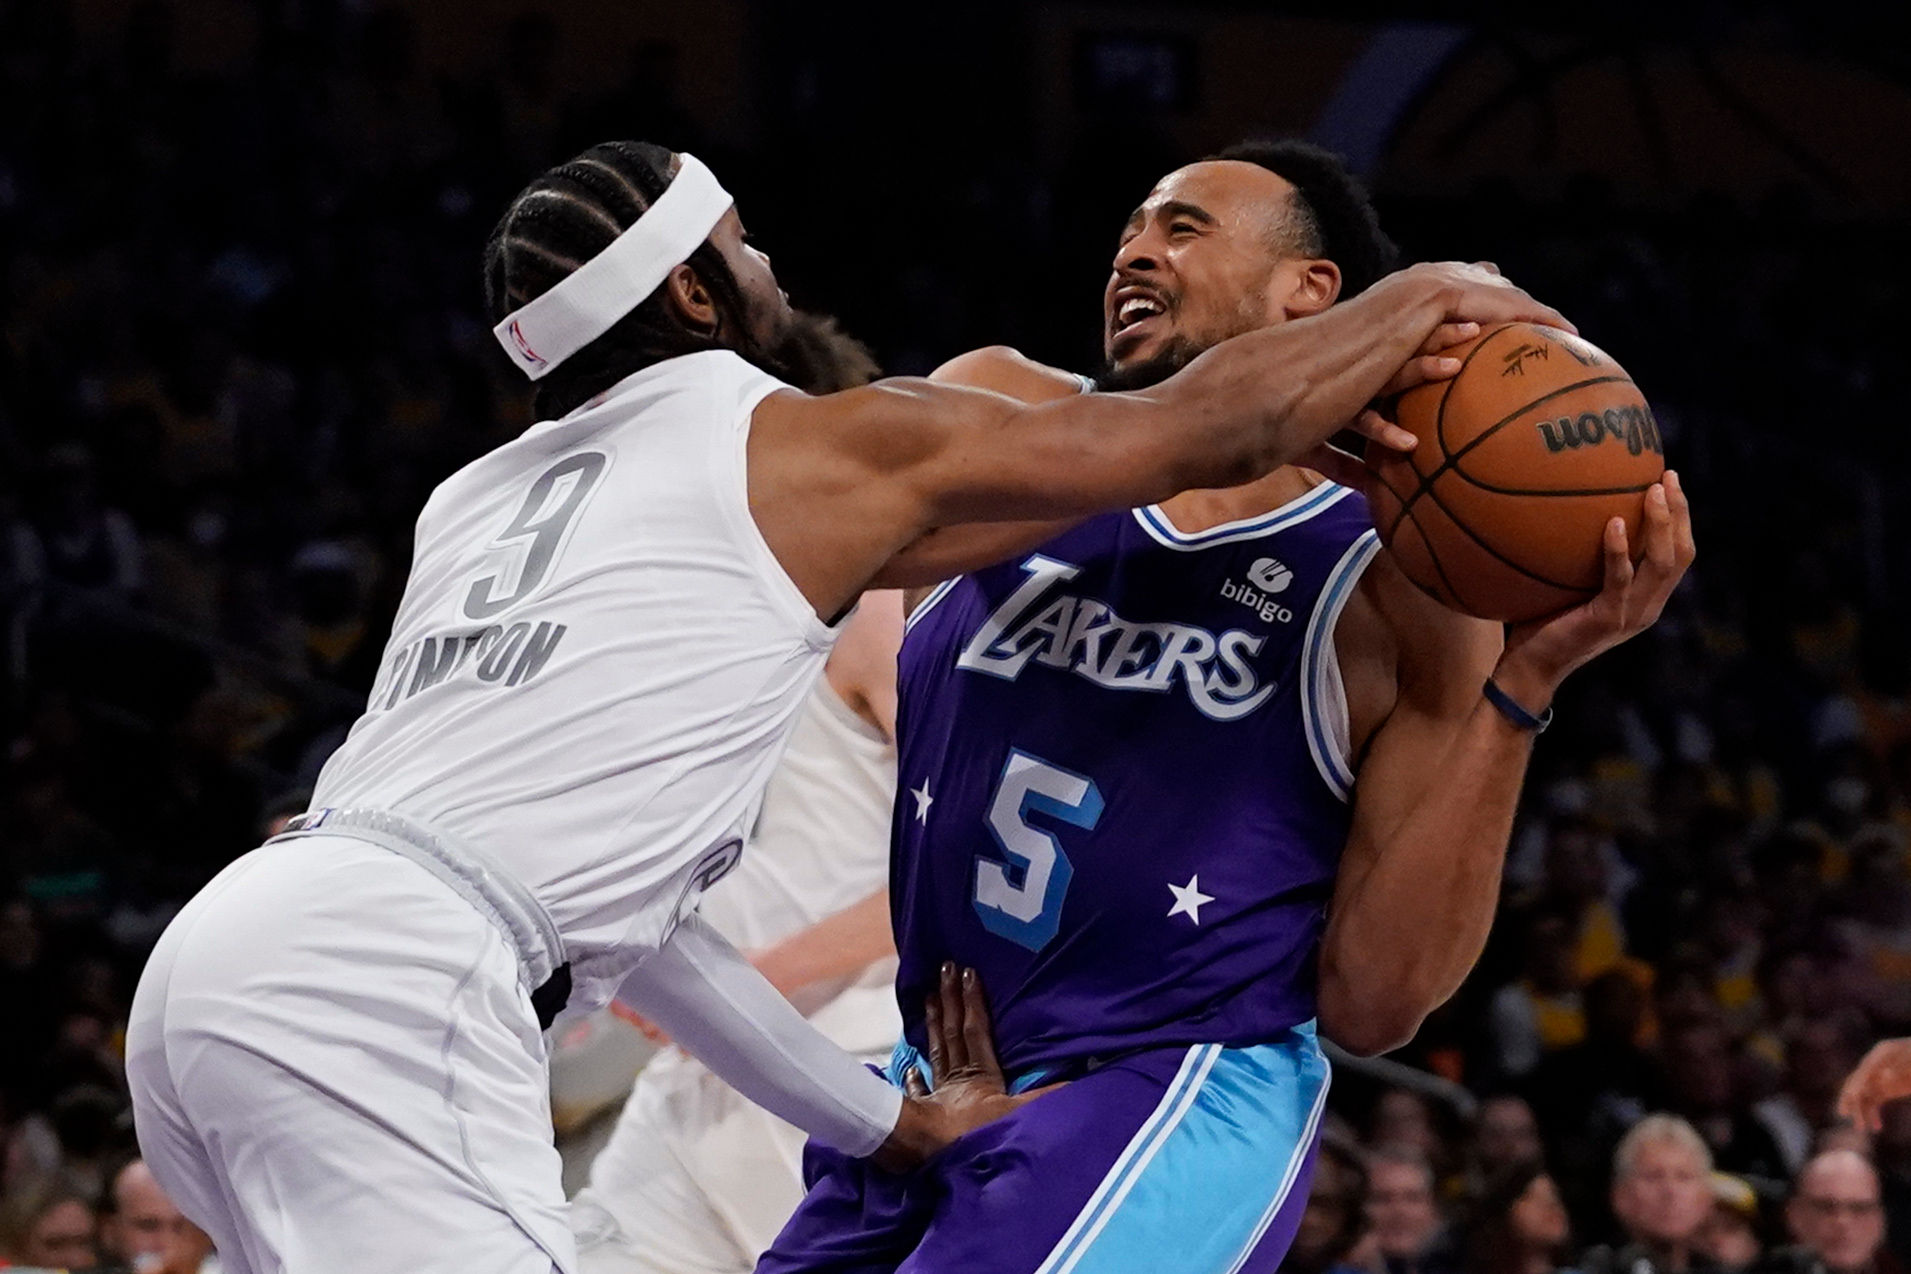 Lakers break 8-game losing streak with Johnson’s season-high 21 points